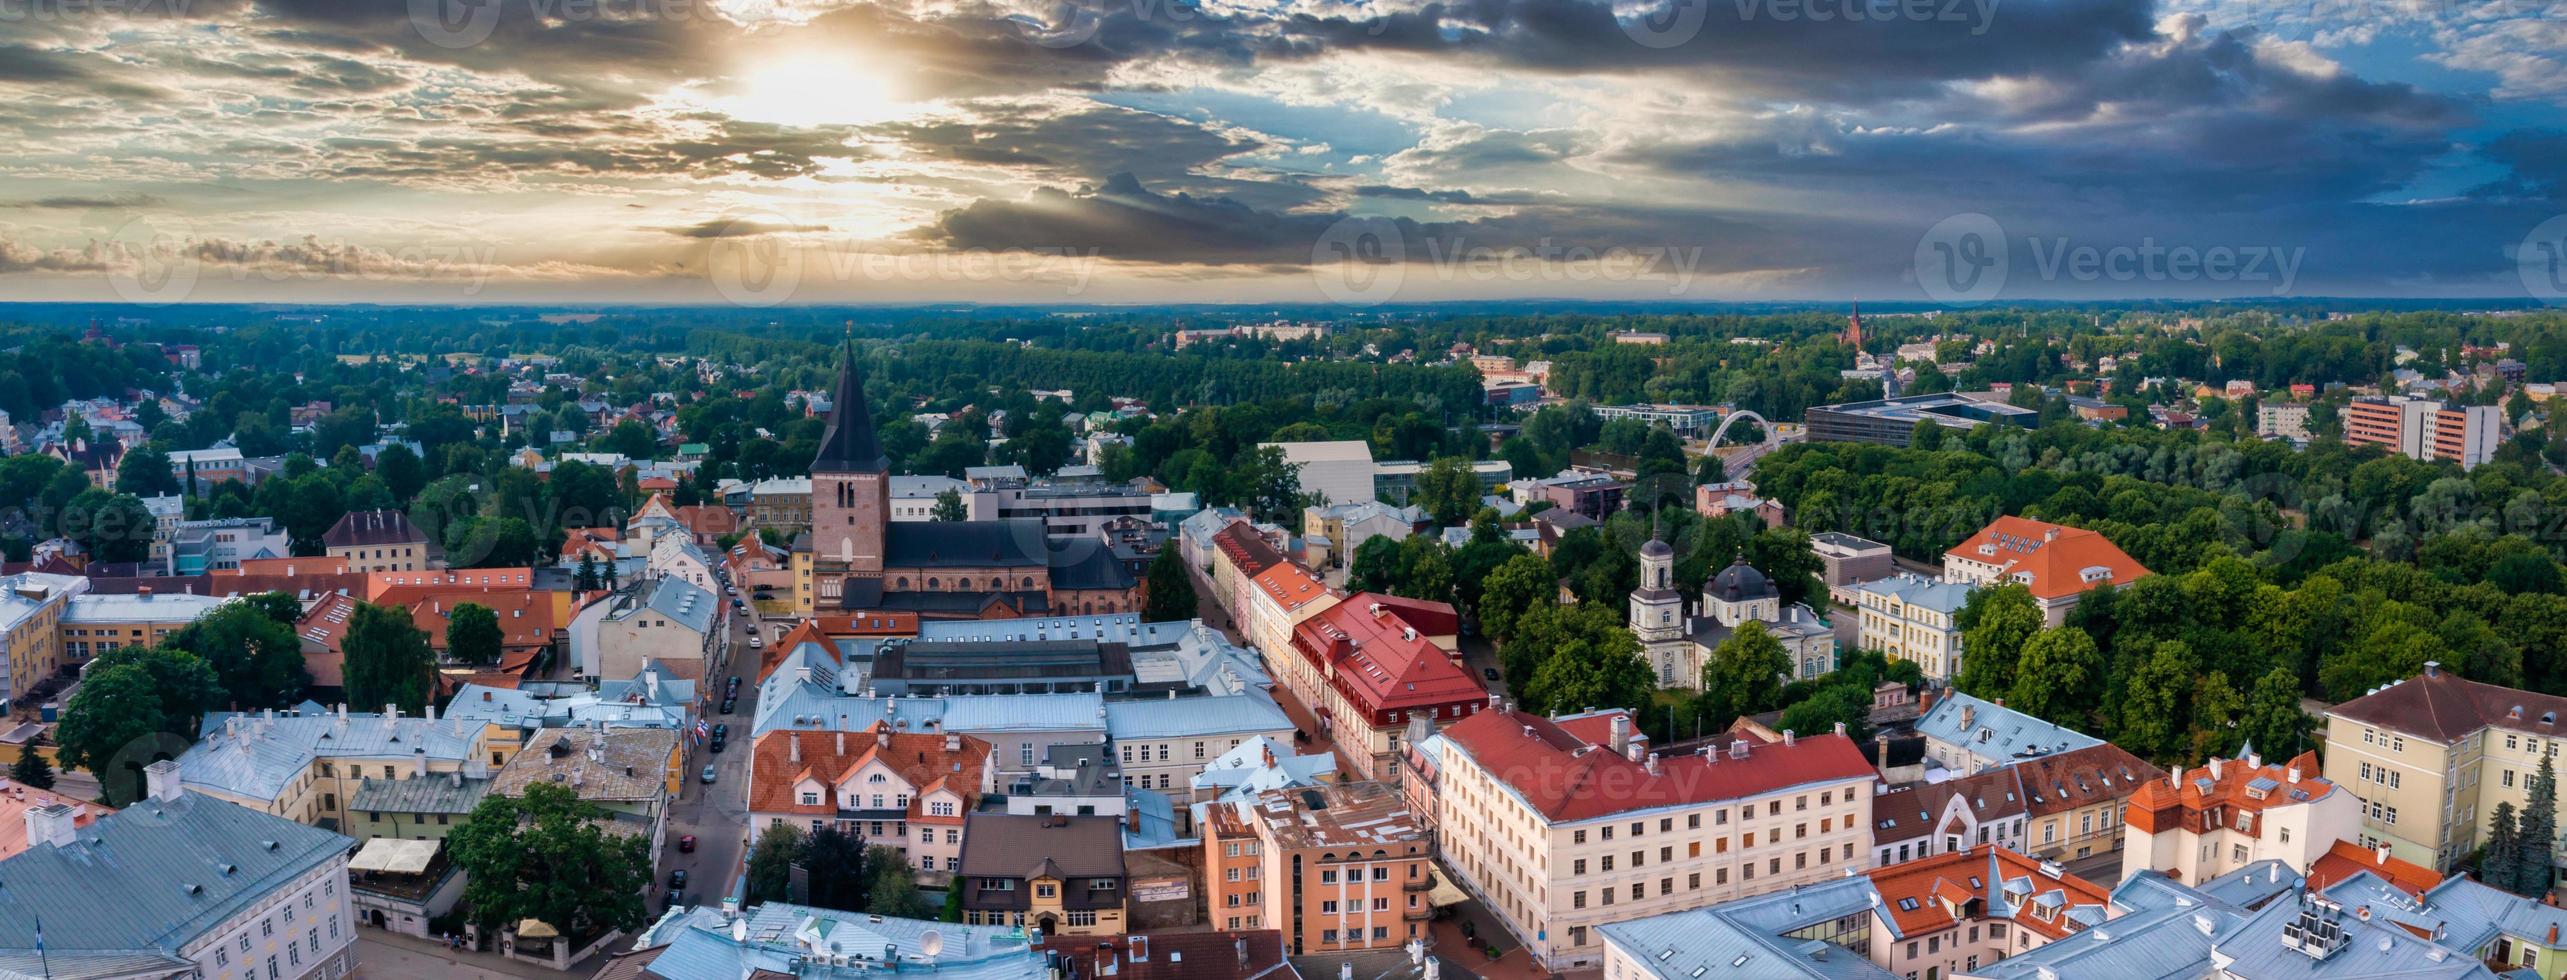 Cityscape of Tartu town in Estonia. photo